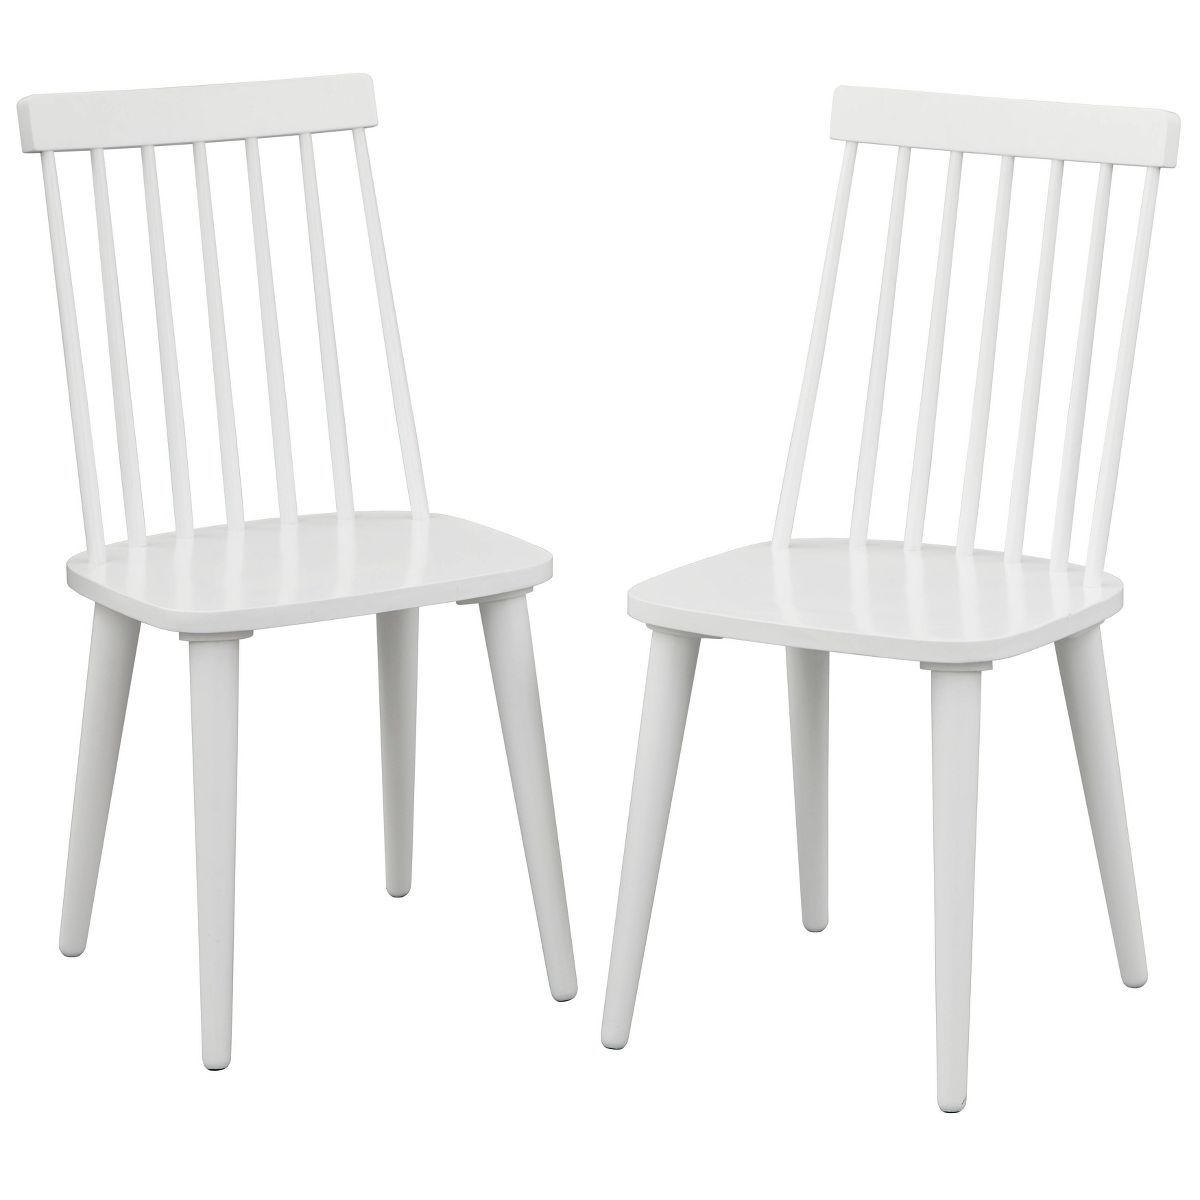 Set of 2 Lowry Dining Chairs - Lifestorey | Target